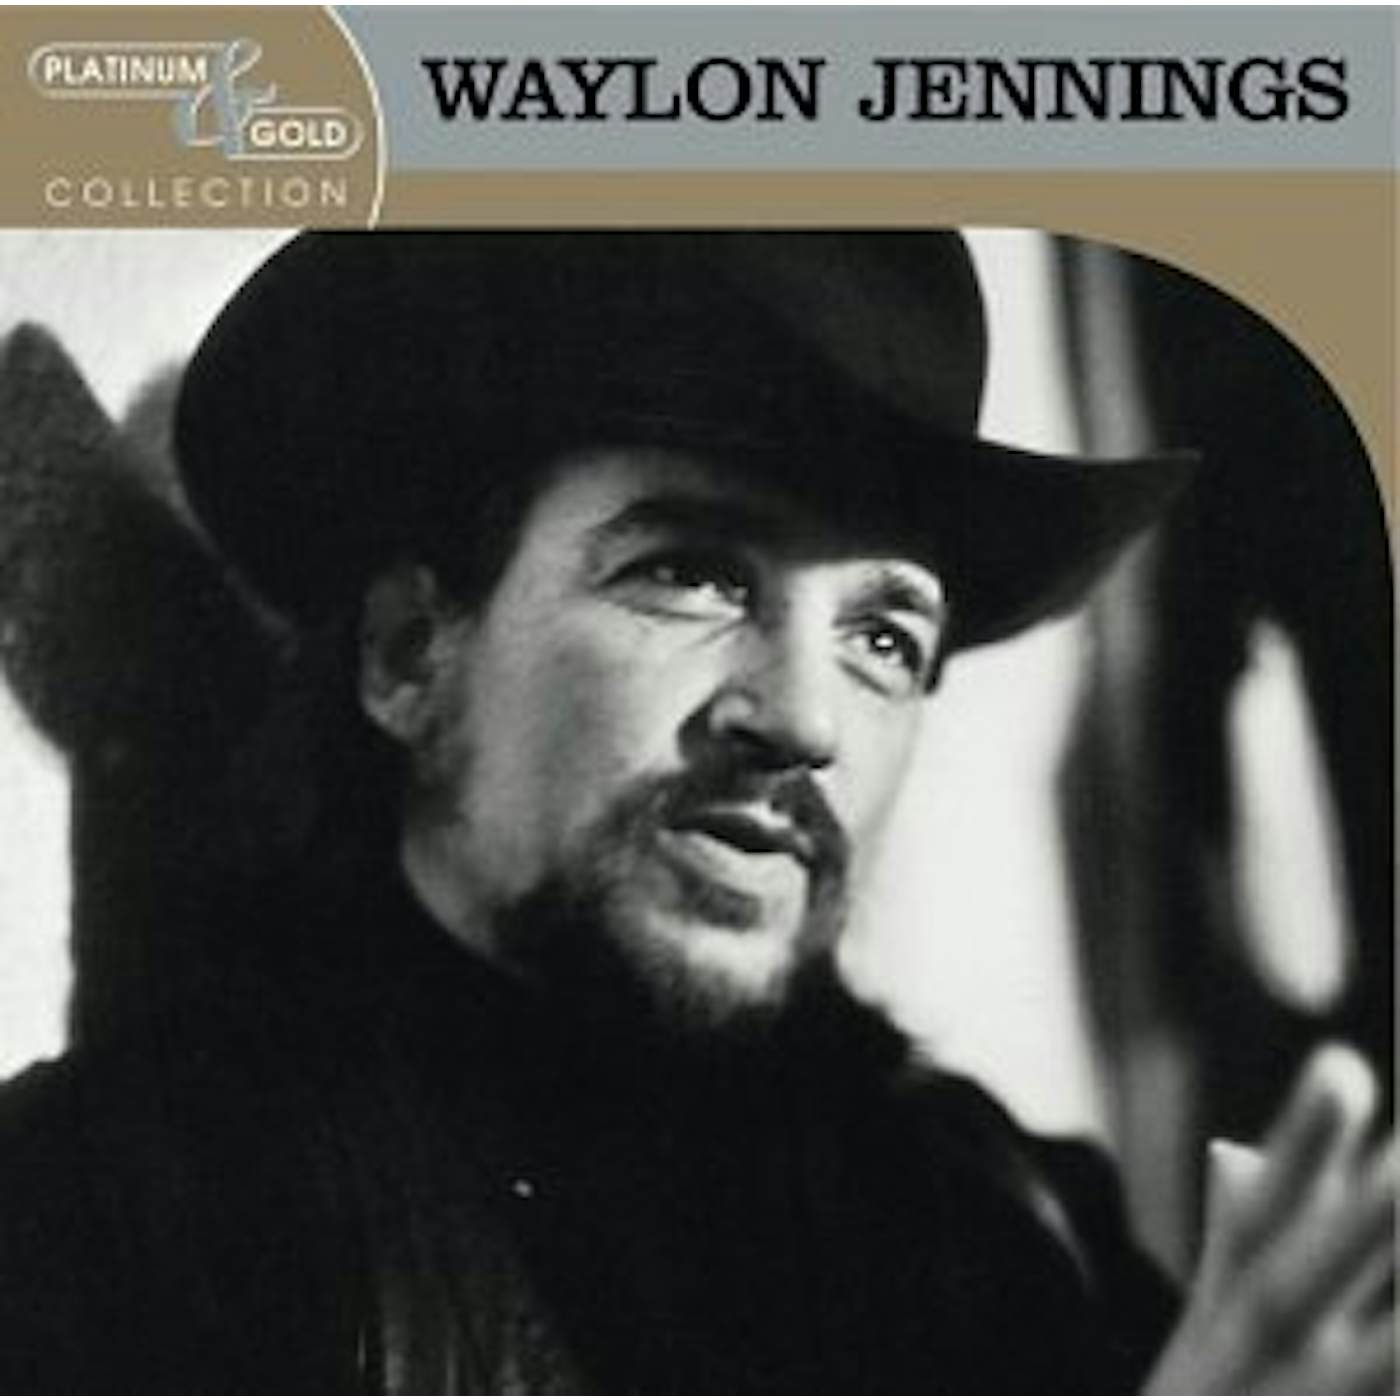 Waylon Jennings PLATINUM & GOLD COLLECTION CD